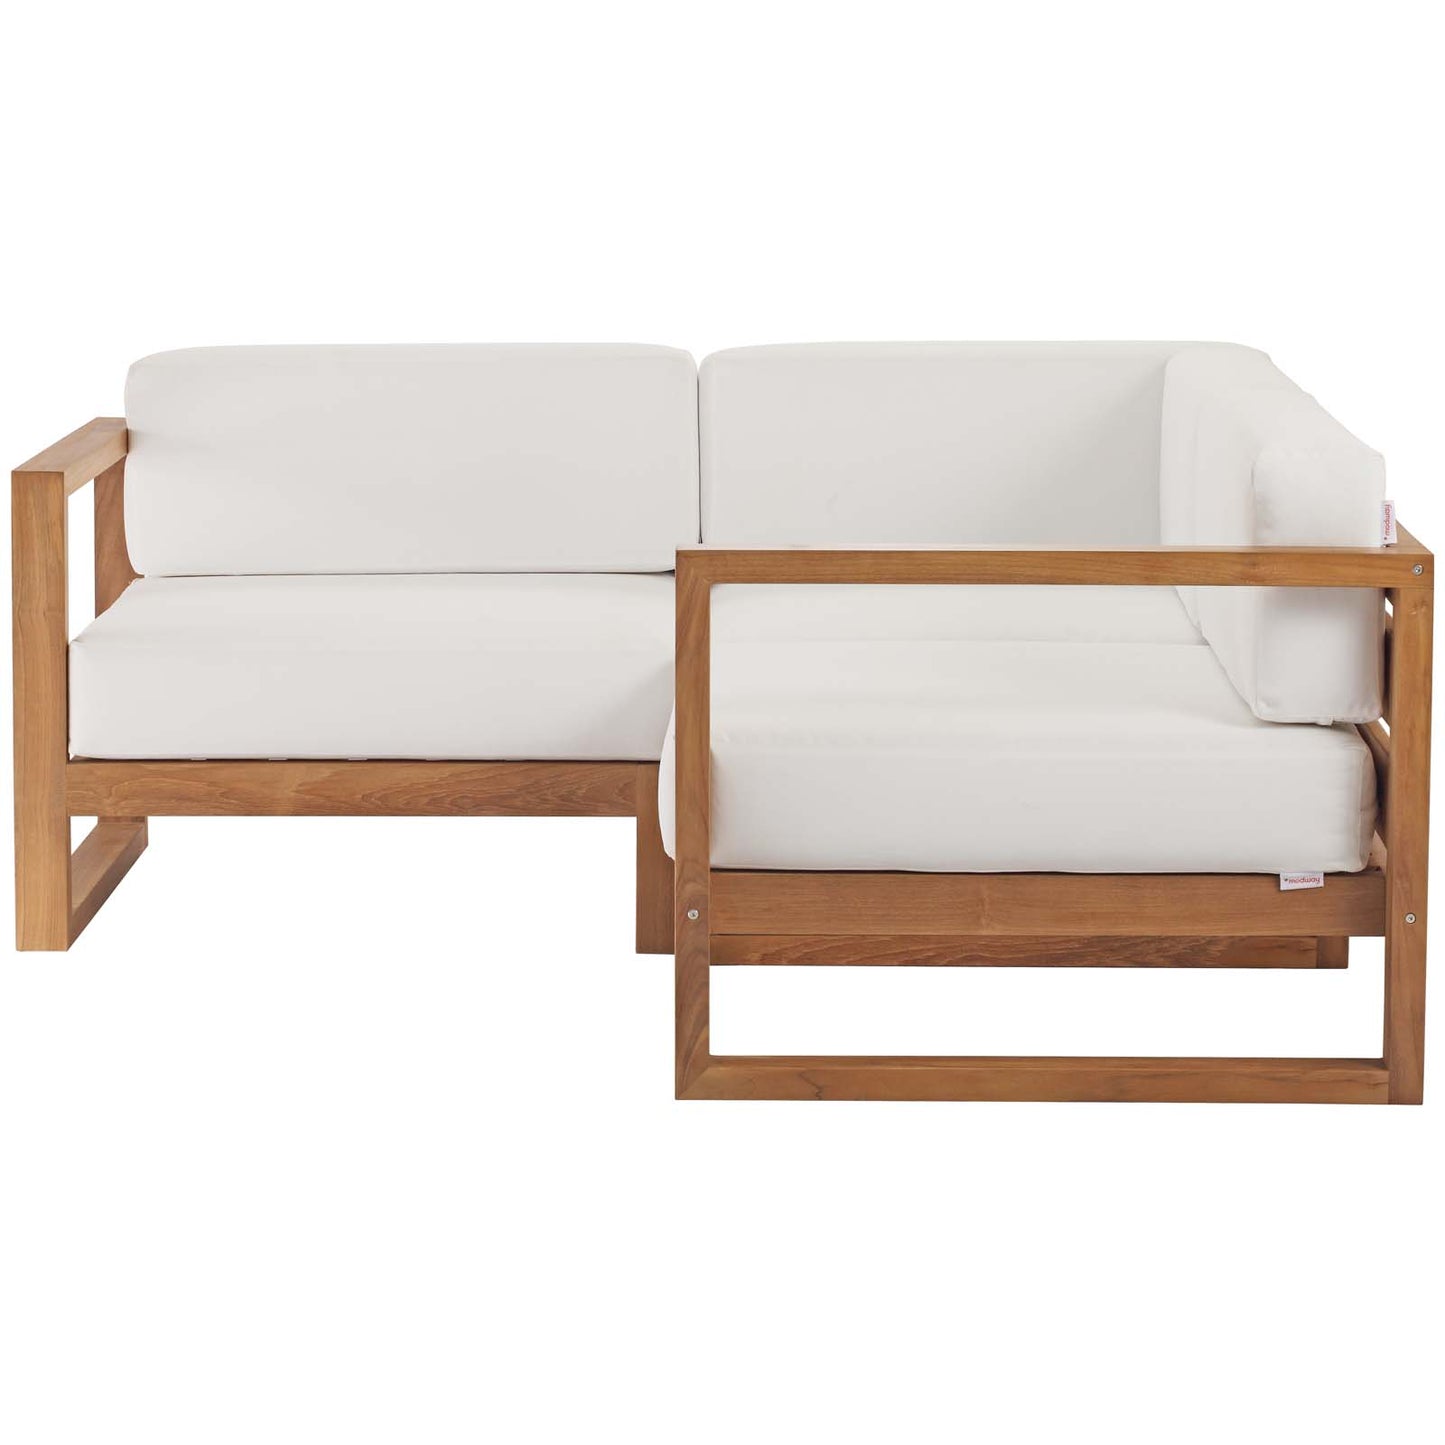 Upland Outdoor Patio Teak Wood 3-Piece Sectional Sofa Set Natural White EEI-4255-NAT-WHI-SET